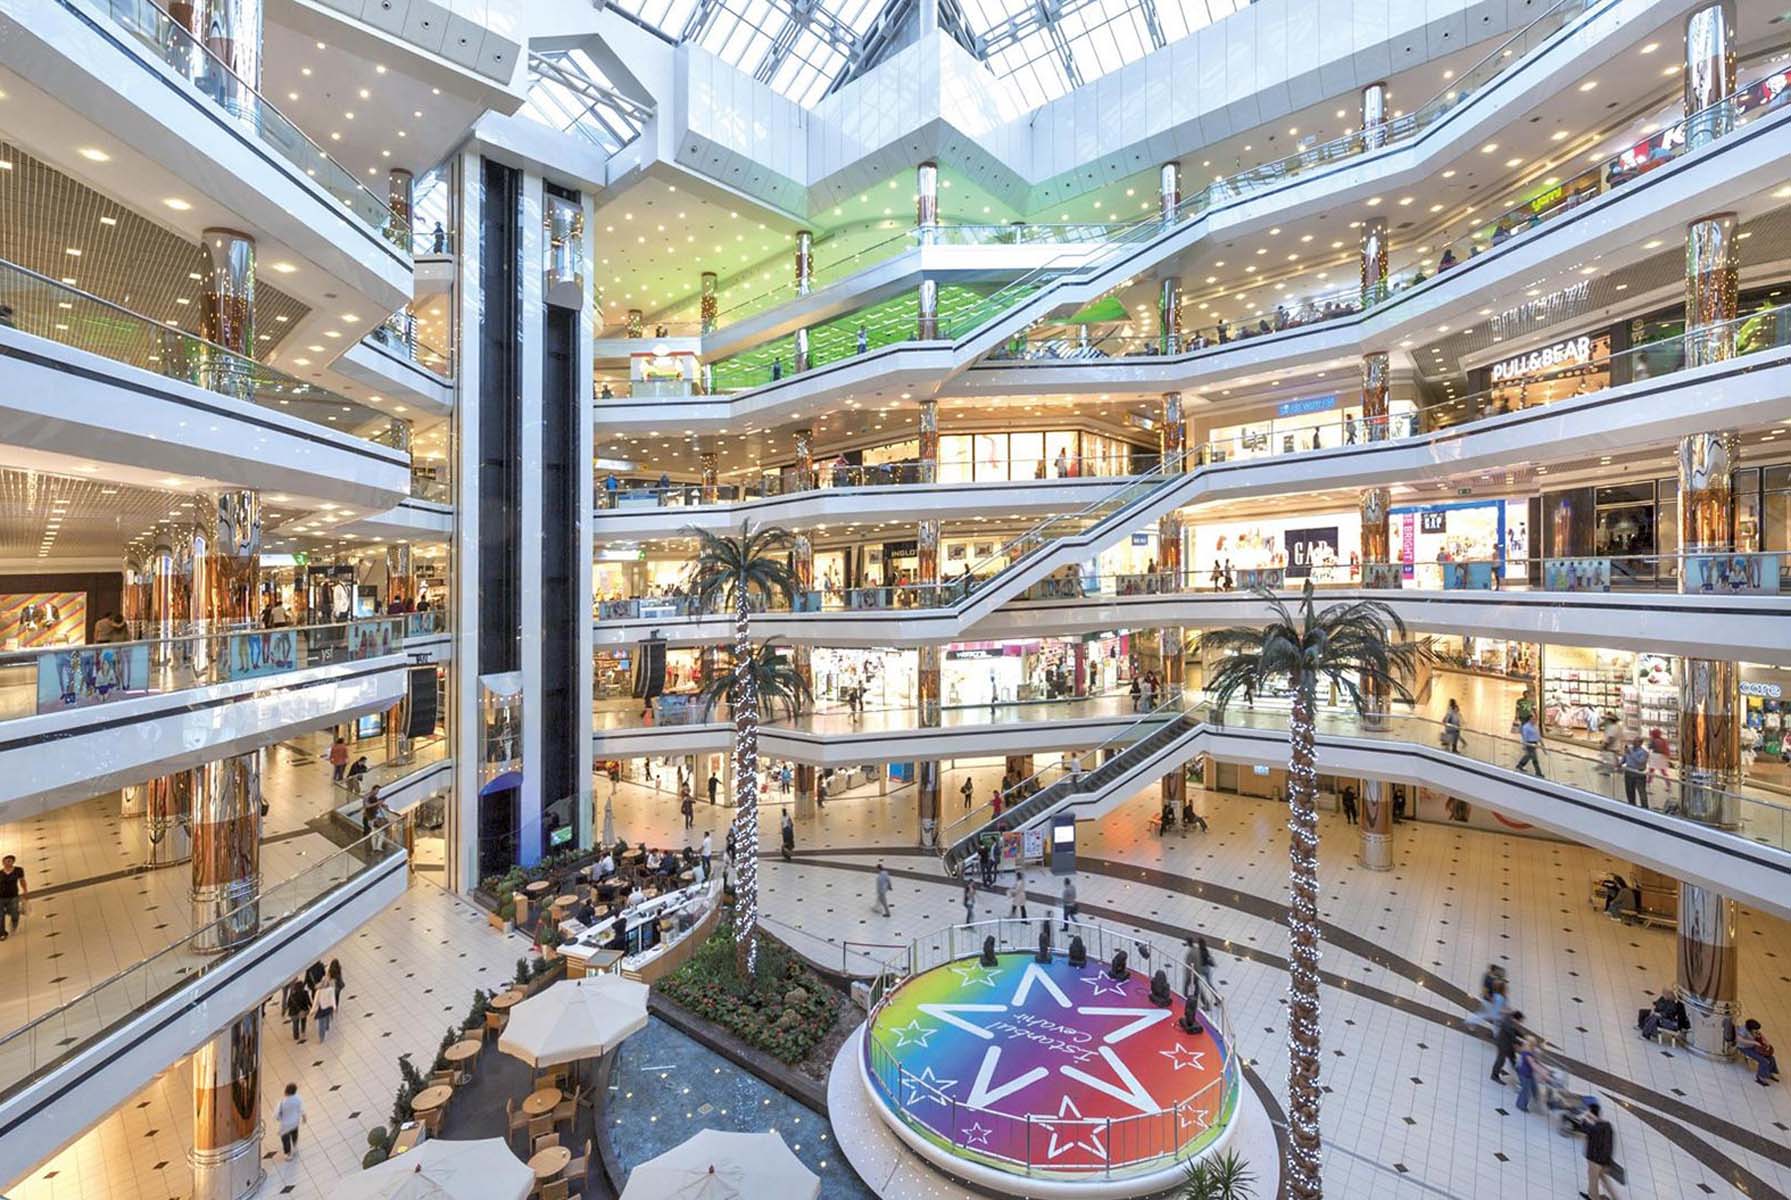 One shopping center. Центр Стамбула «Джевахир». Торговый центр Mall of Istanbul - Стамбул. Джевахир торговый центр. Cevahir торговый центр в Стамбуле.